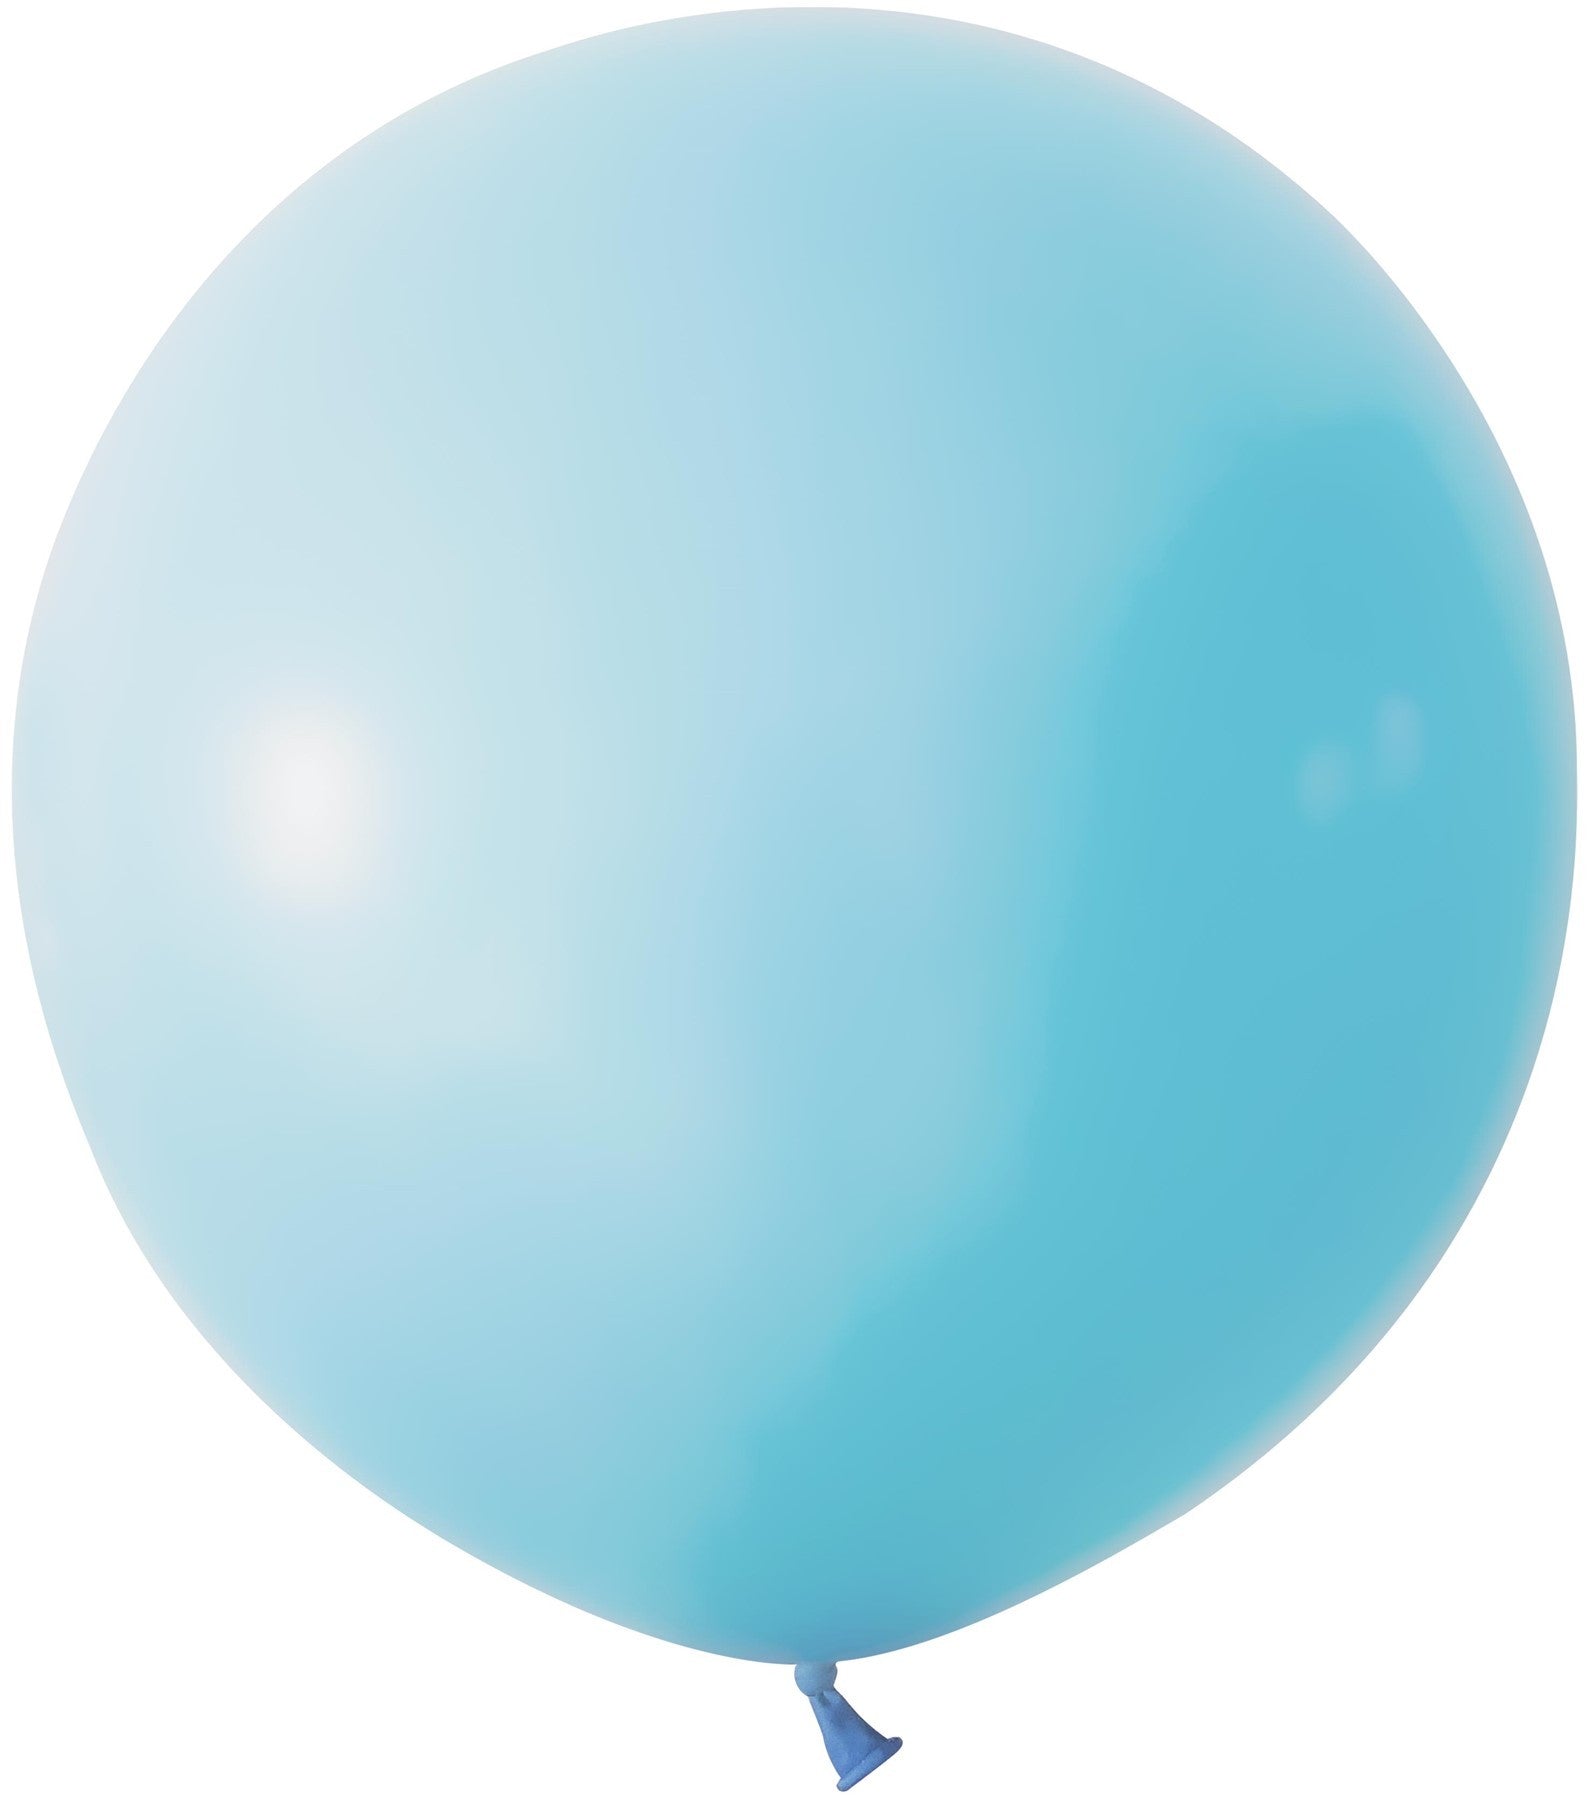 View Macaron Blue Jumbo Latex Balloon 24 inch Pk 3 information